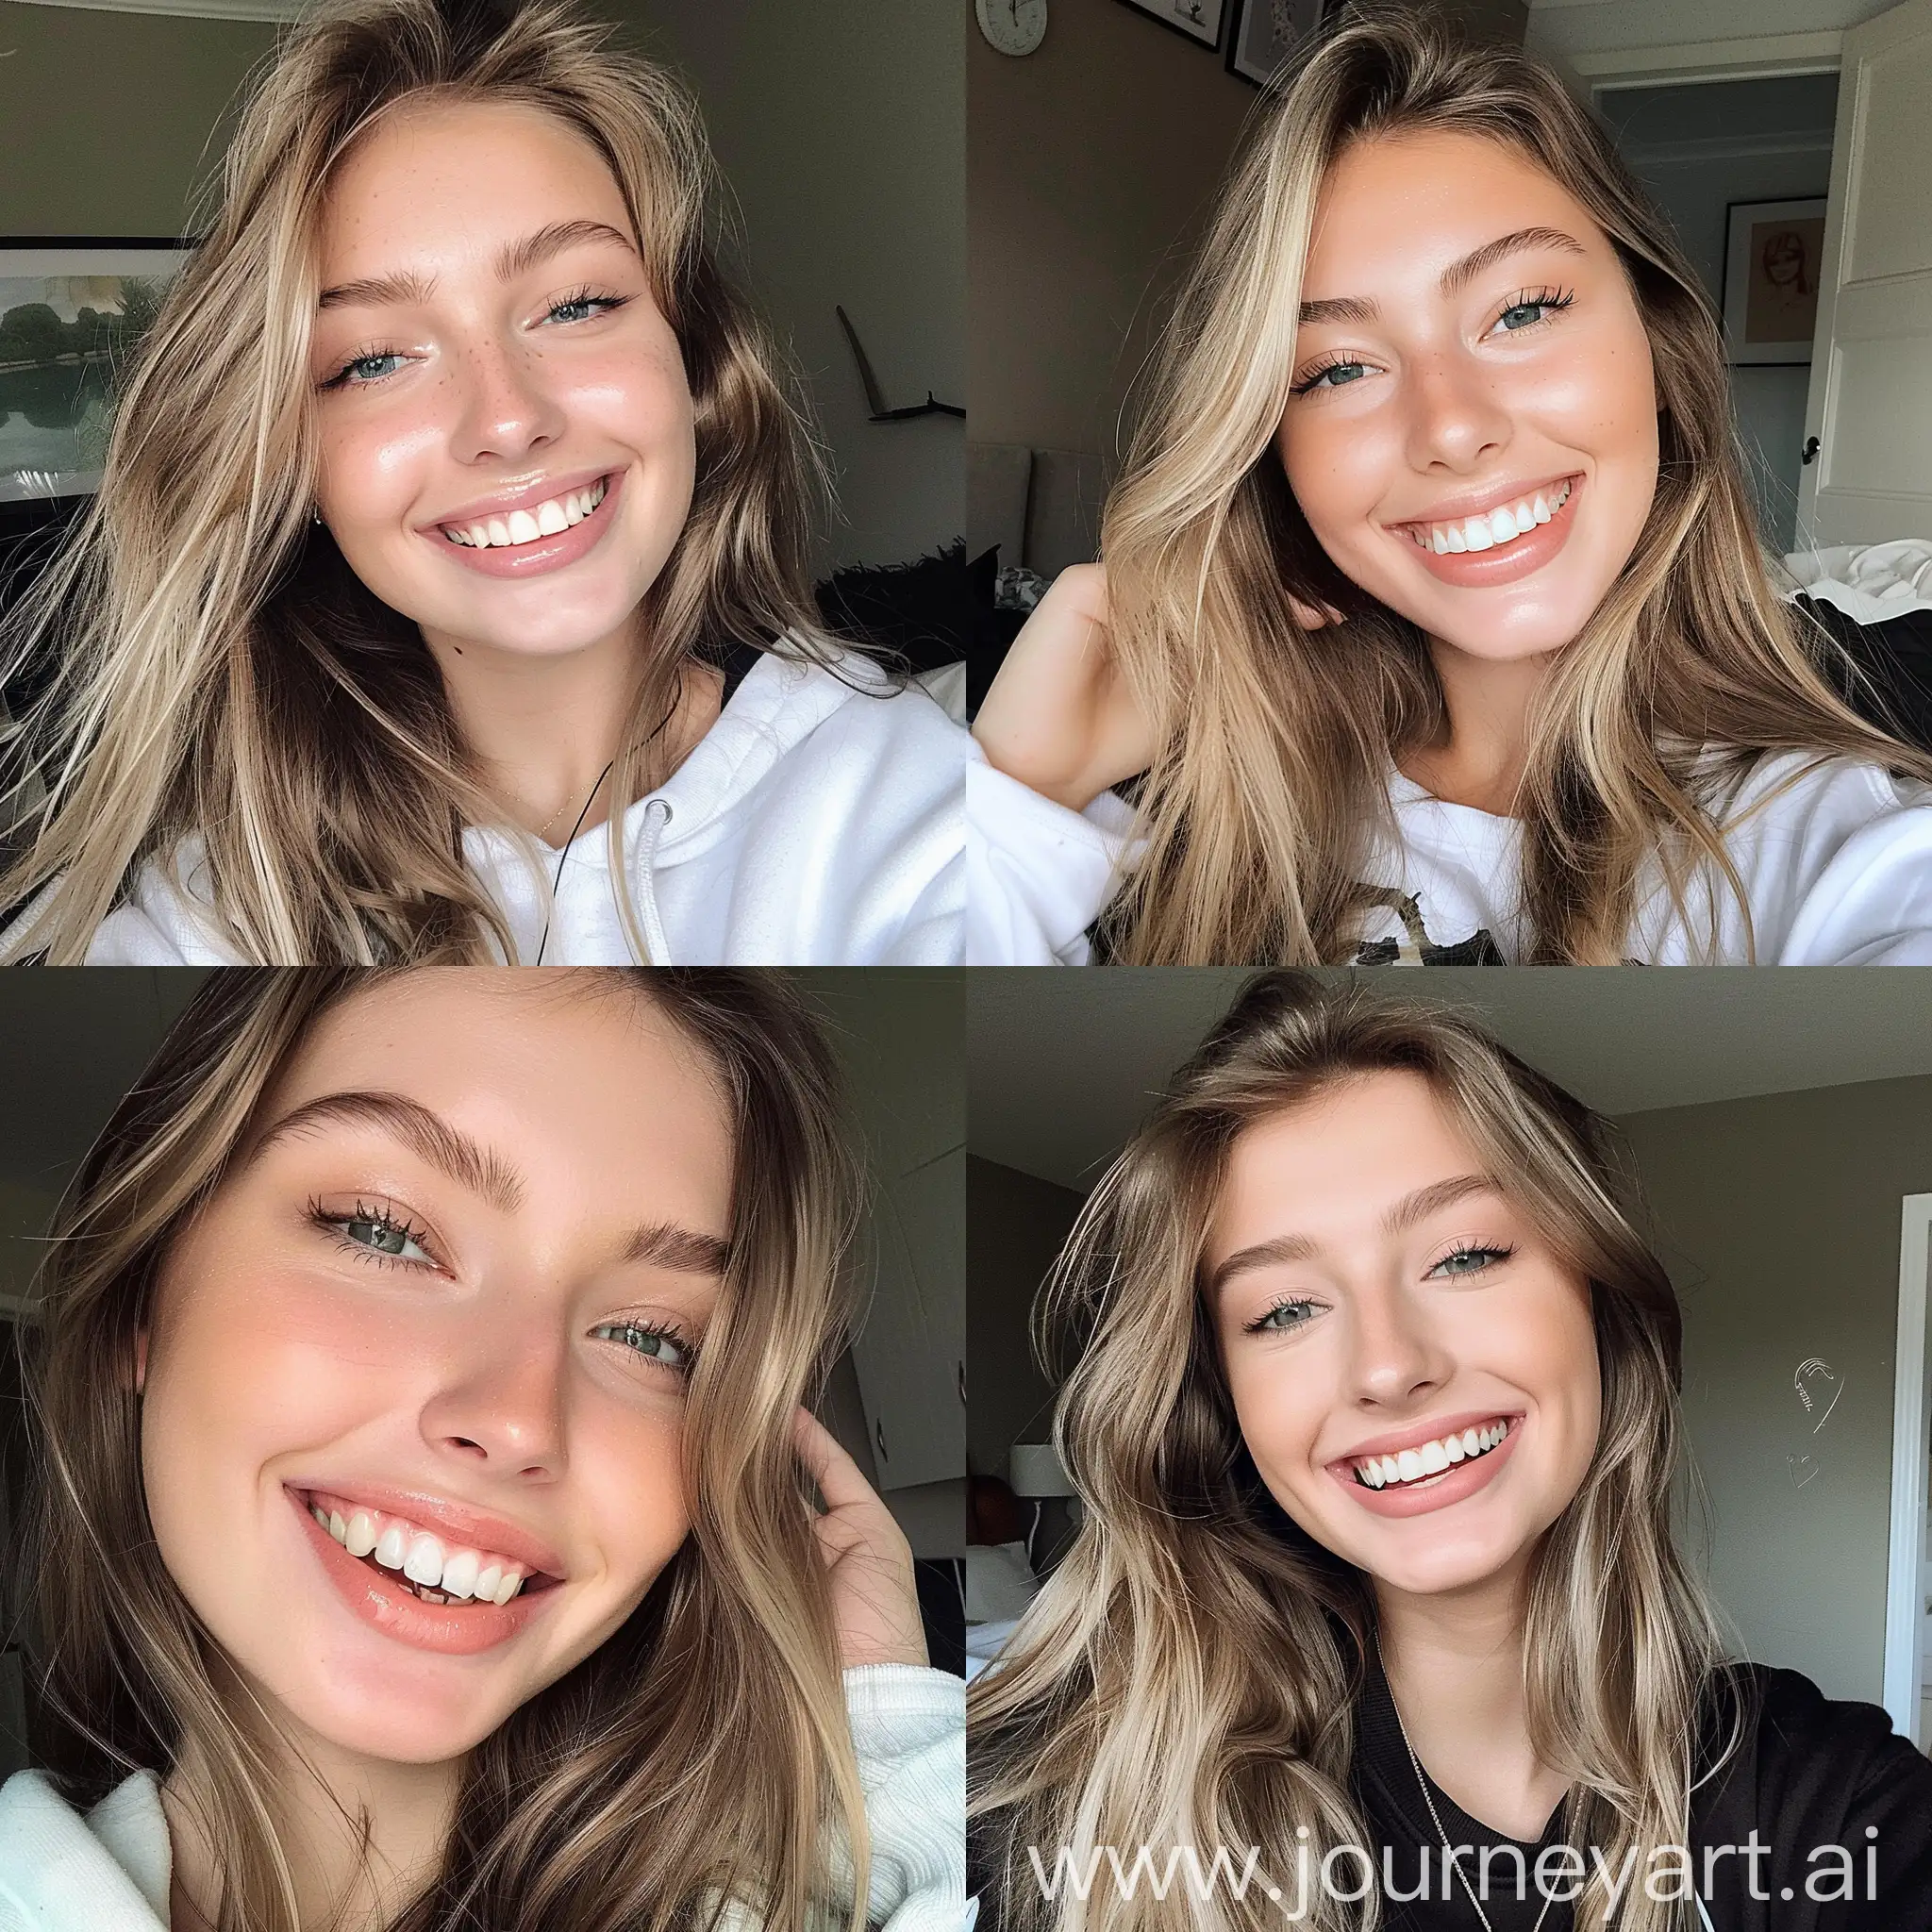 Smiling-Teenage-Influencer-Instagram-Selfie-with-Perfect-Teeth